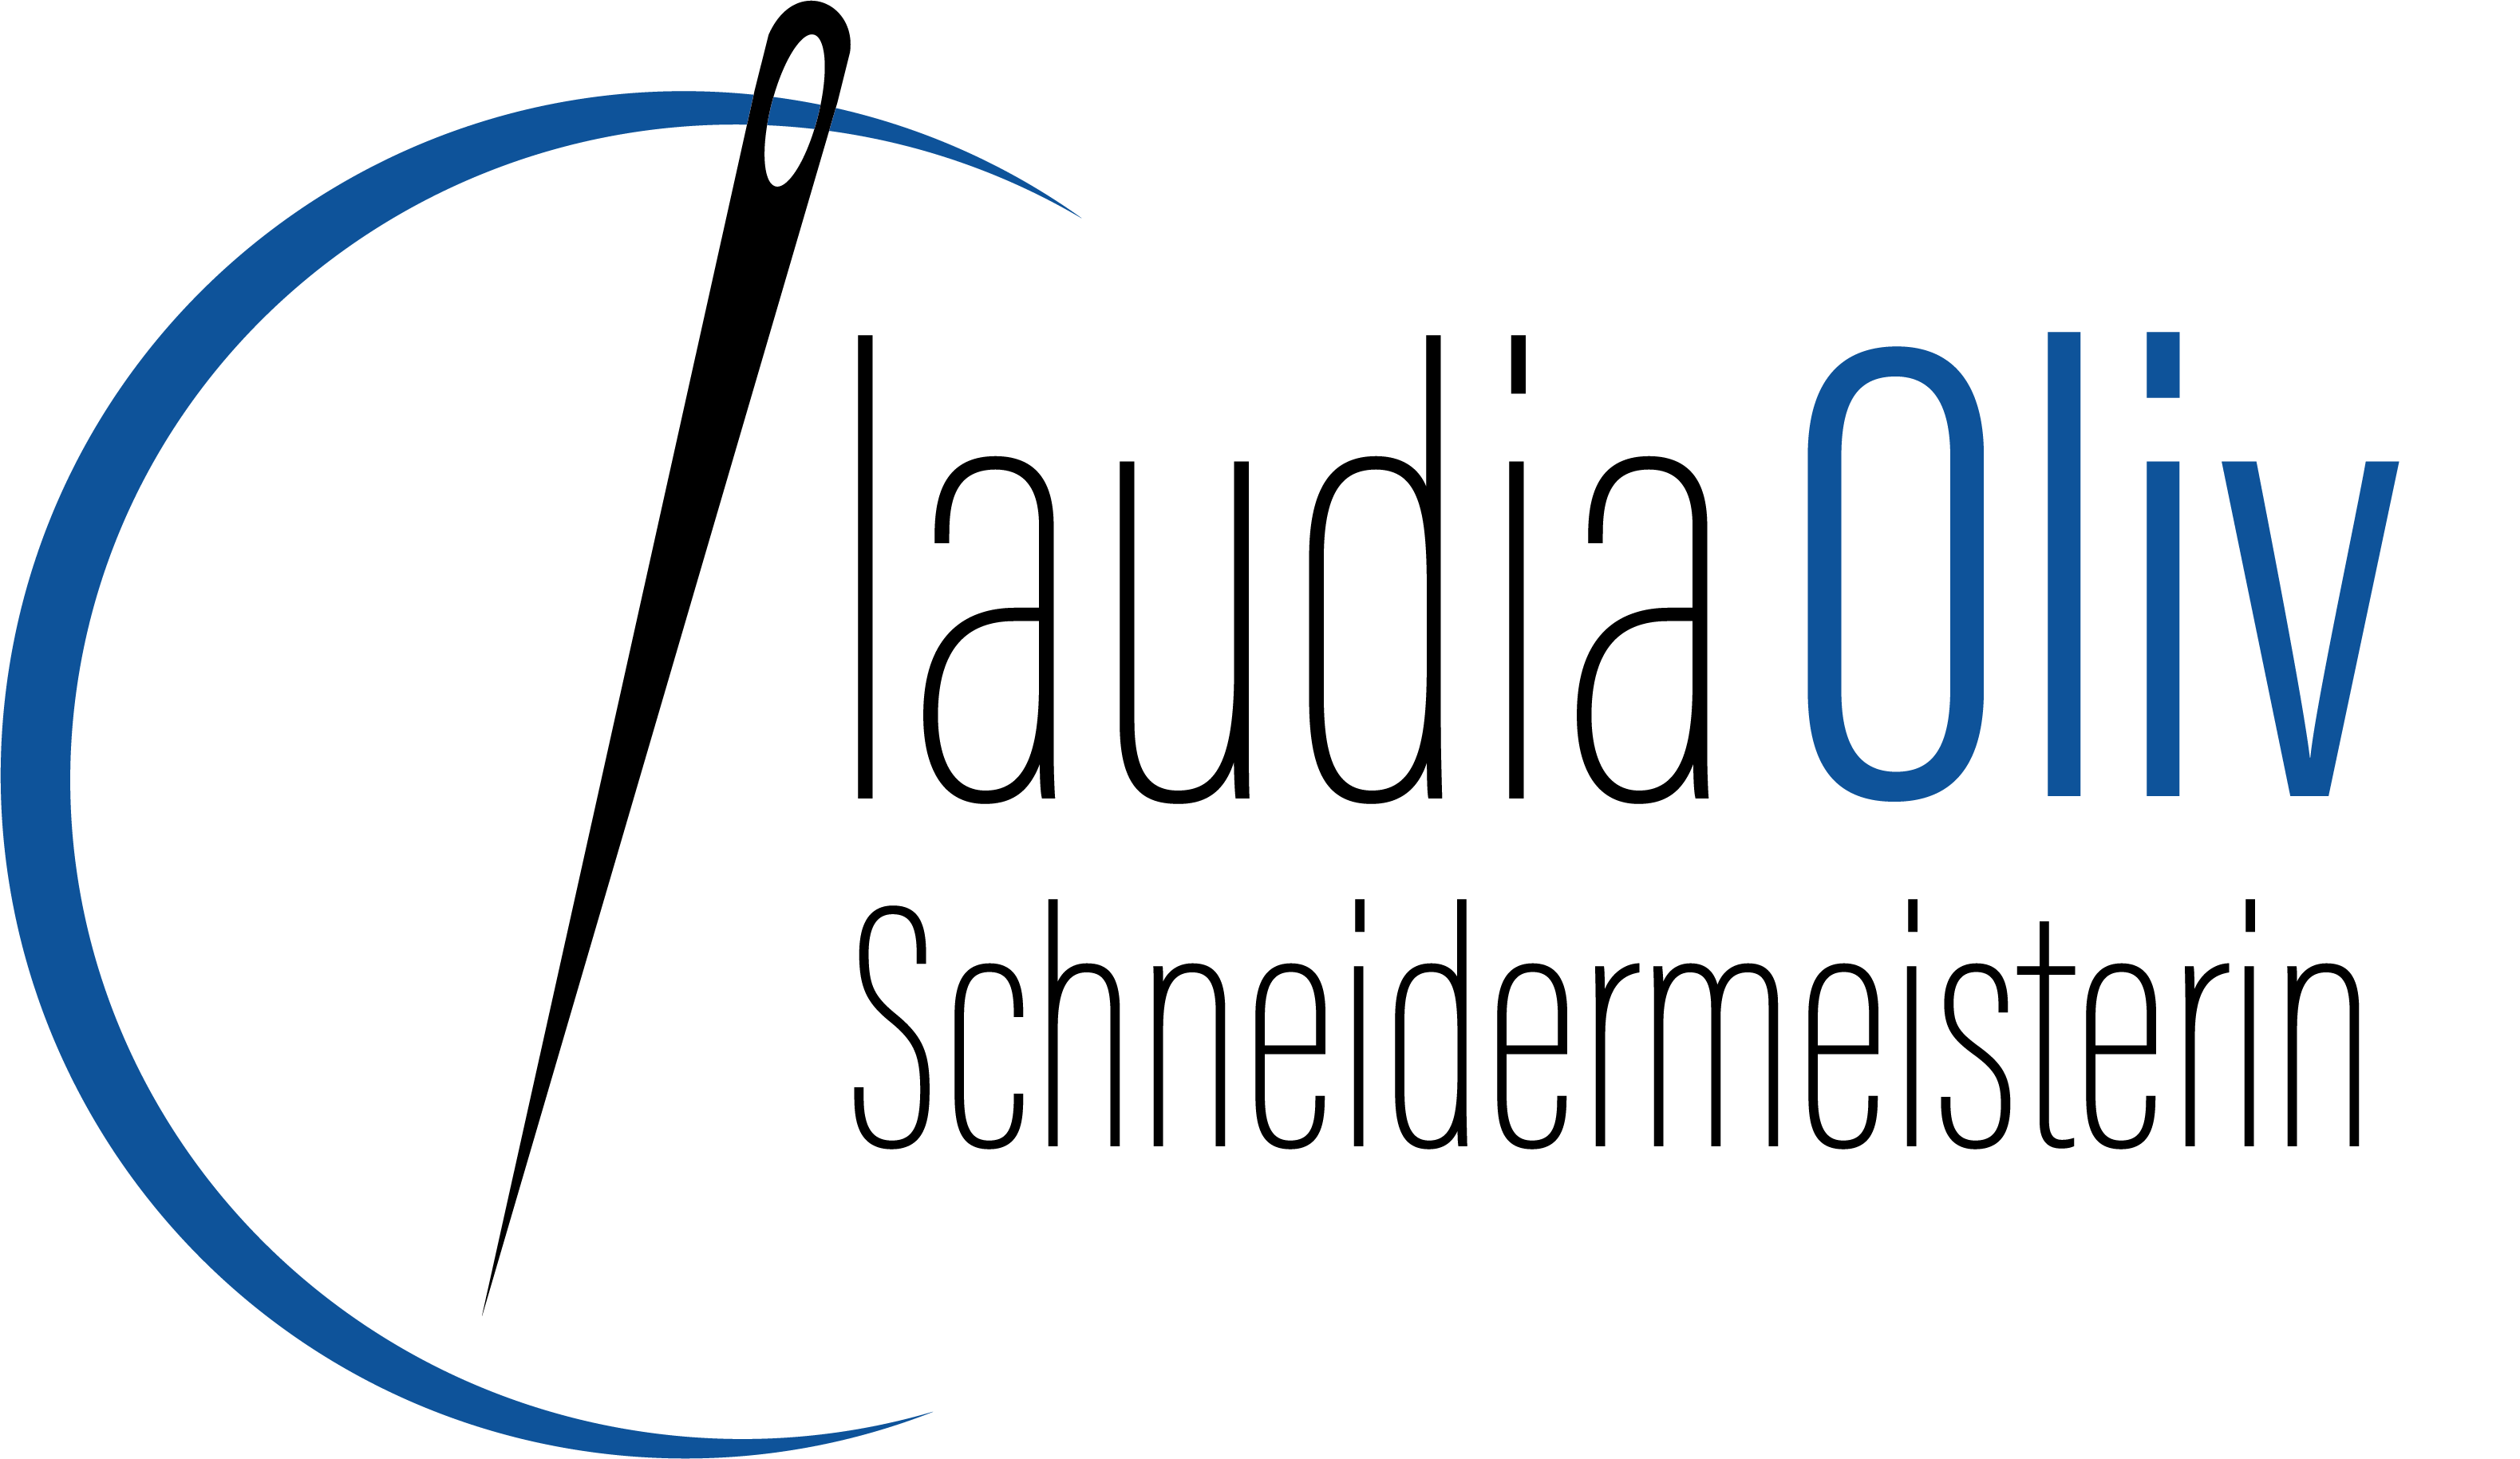 Schneidermeisterin Claudia Oliv Logo